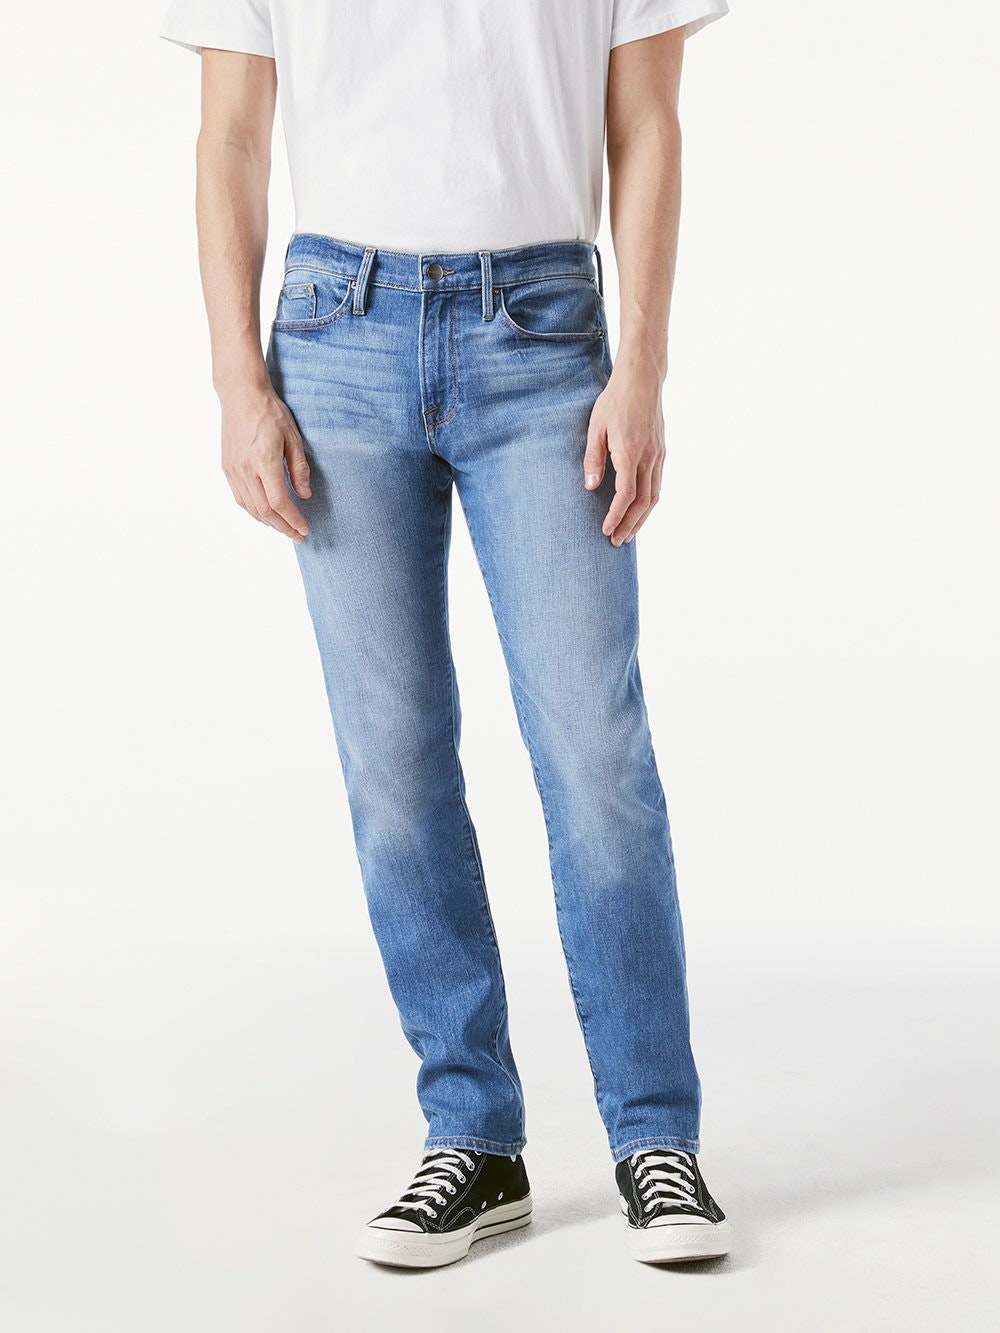 L'Homme Athletic Slim Jeans - FRAME, Luxury Designer Fashion